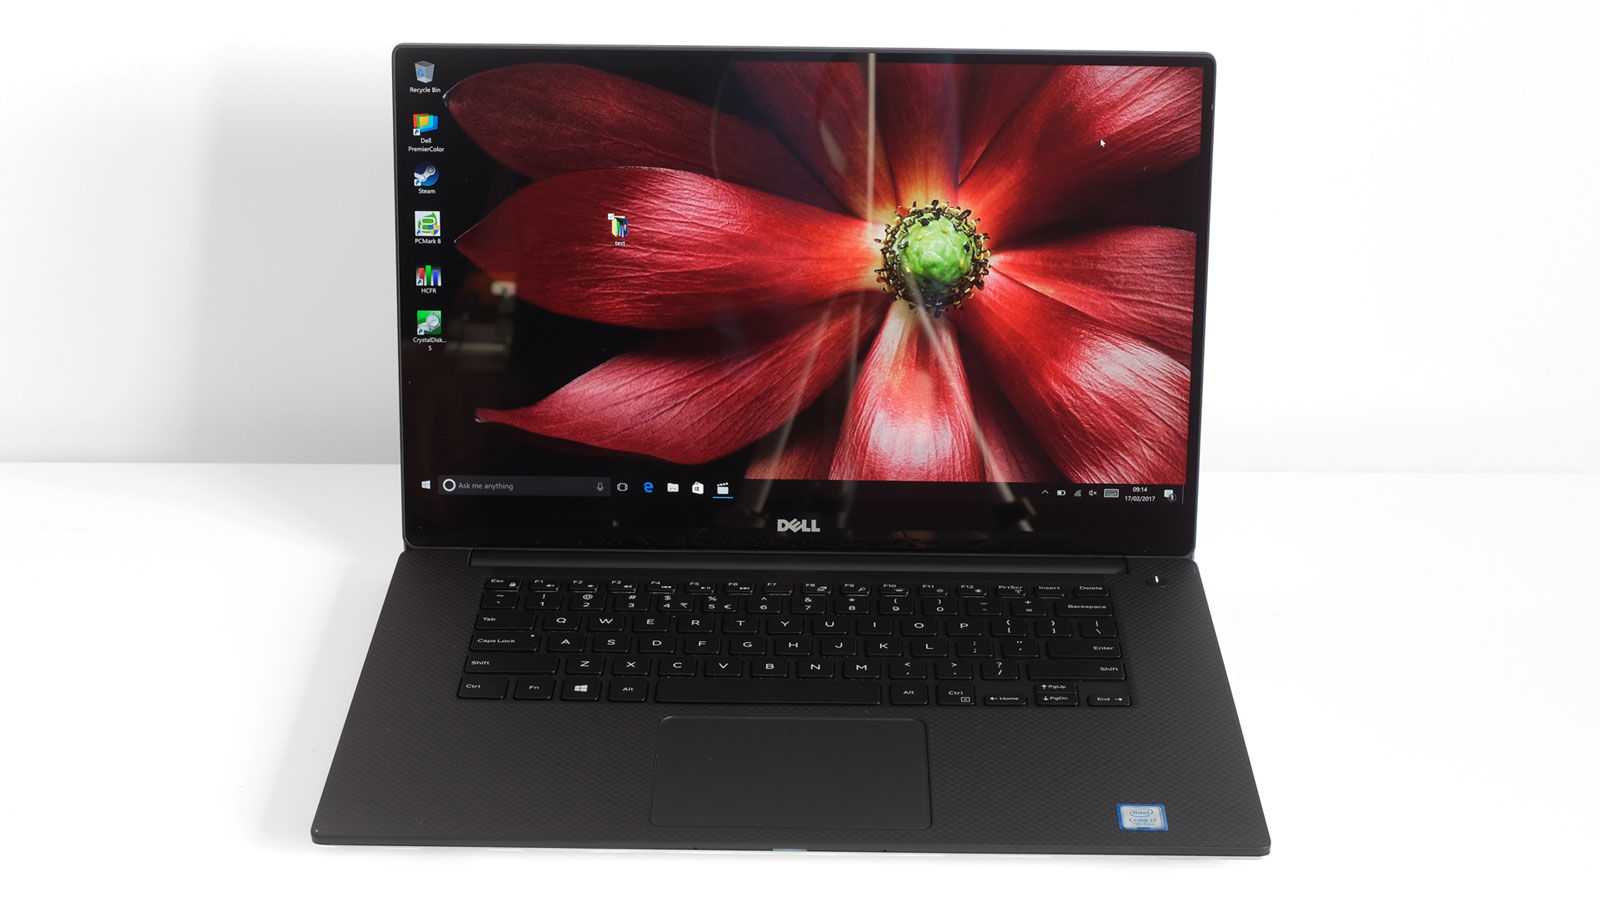 Dell xps 10 tablet 64gb dock